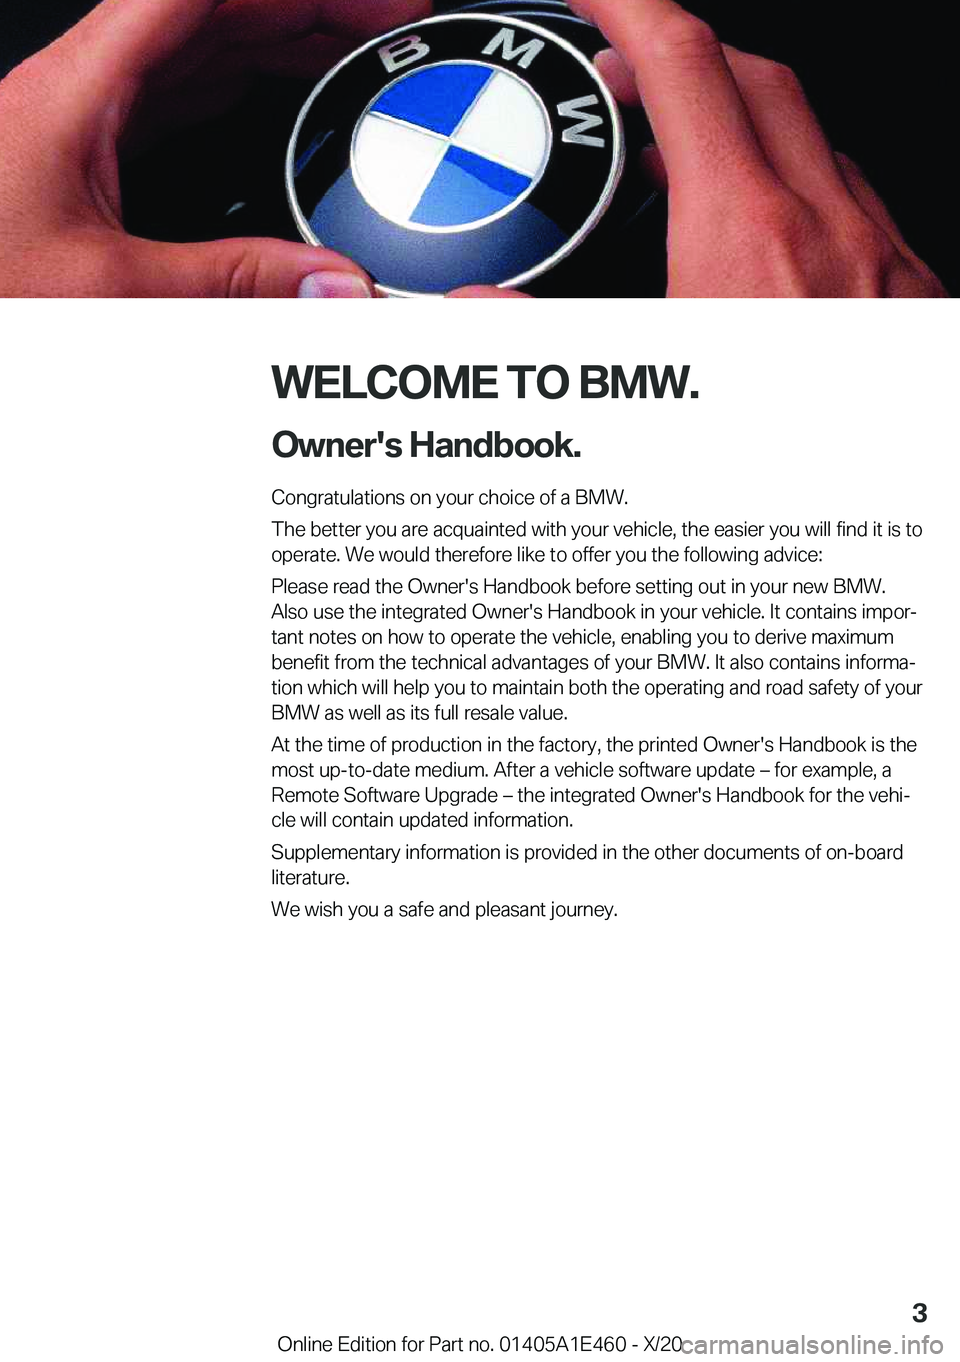 BMW M3 2021  Owners Manual �W�E�L�C�O�M�E��T�O��B�M�W�.�O�w�n�e�r�'�s��H�a�n�d�b�o�o�k�.
�C�o�n�g�r�a�t�u�l�a�t�i�o�n�s��o�n��y�o�u�r��c�h�o�i�c�e��o�f��a��B�M�W�.
�T�h�e��b�e�t�t�e�r��y�o�u��a�r�e��a�c�q�u�a�i